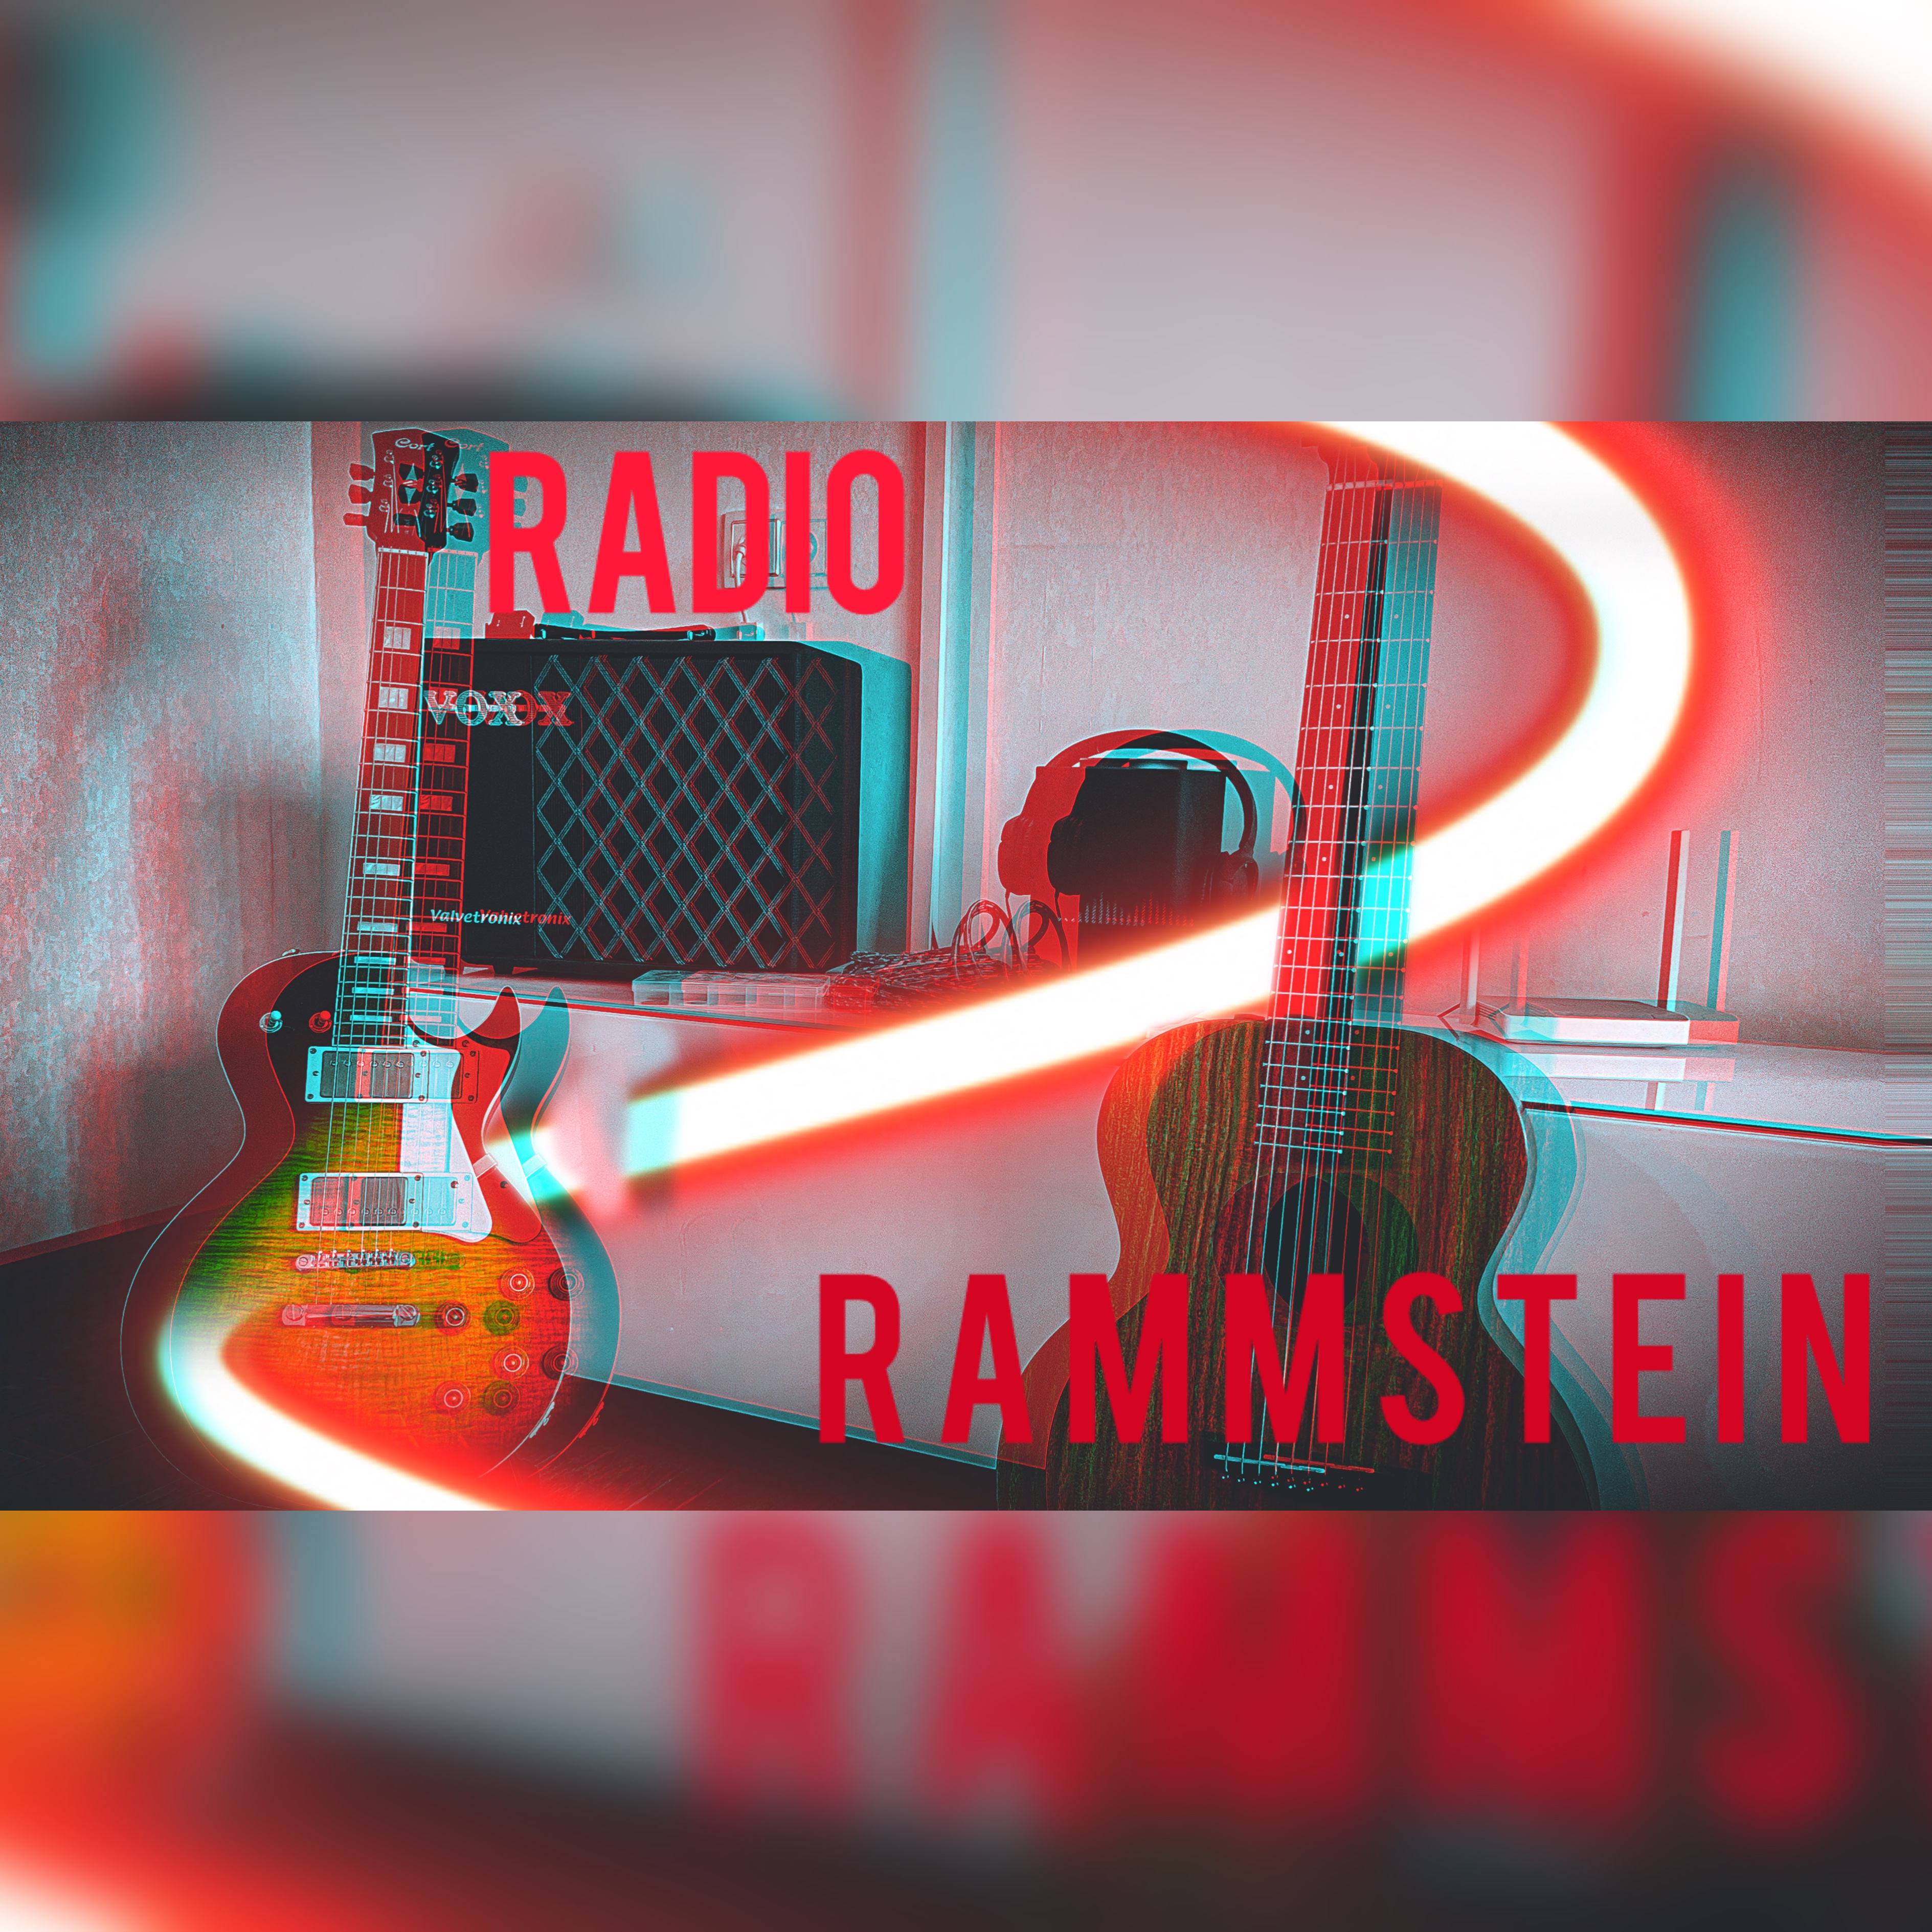 Rammstein-Radio (guitar cover)